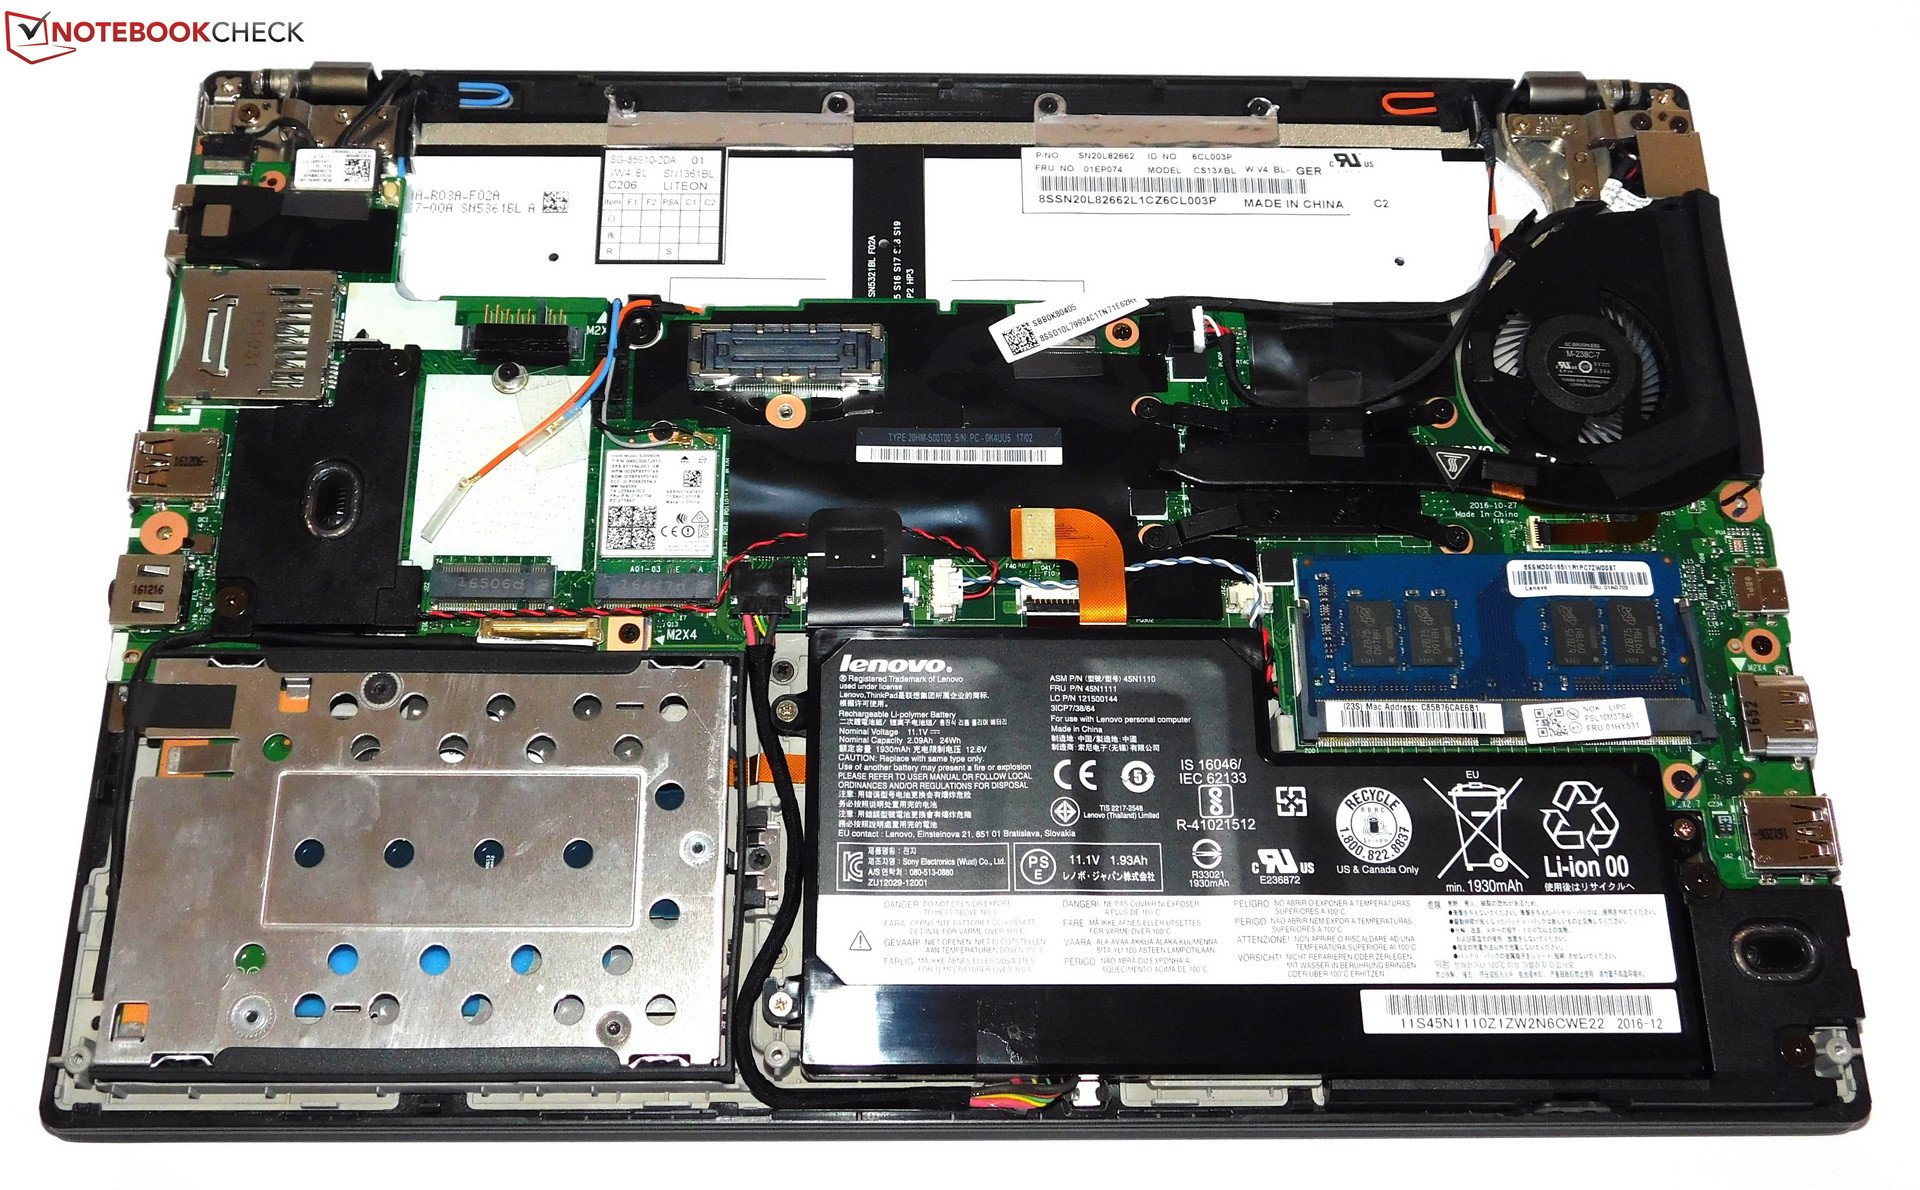 Обзор ноутбука Lenovo ThinkPad X270 - Notebookcheck-ru.com